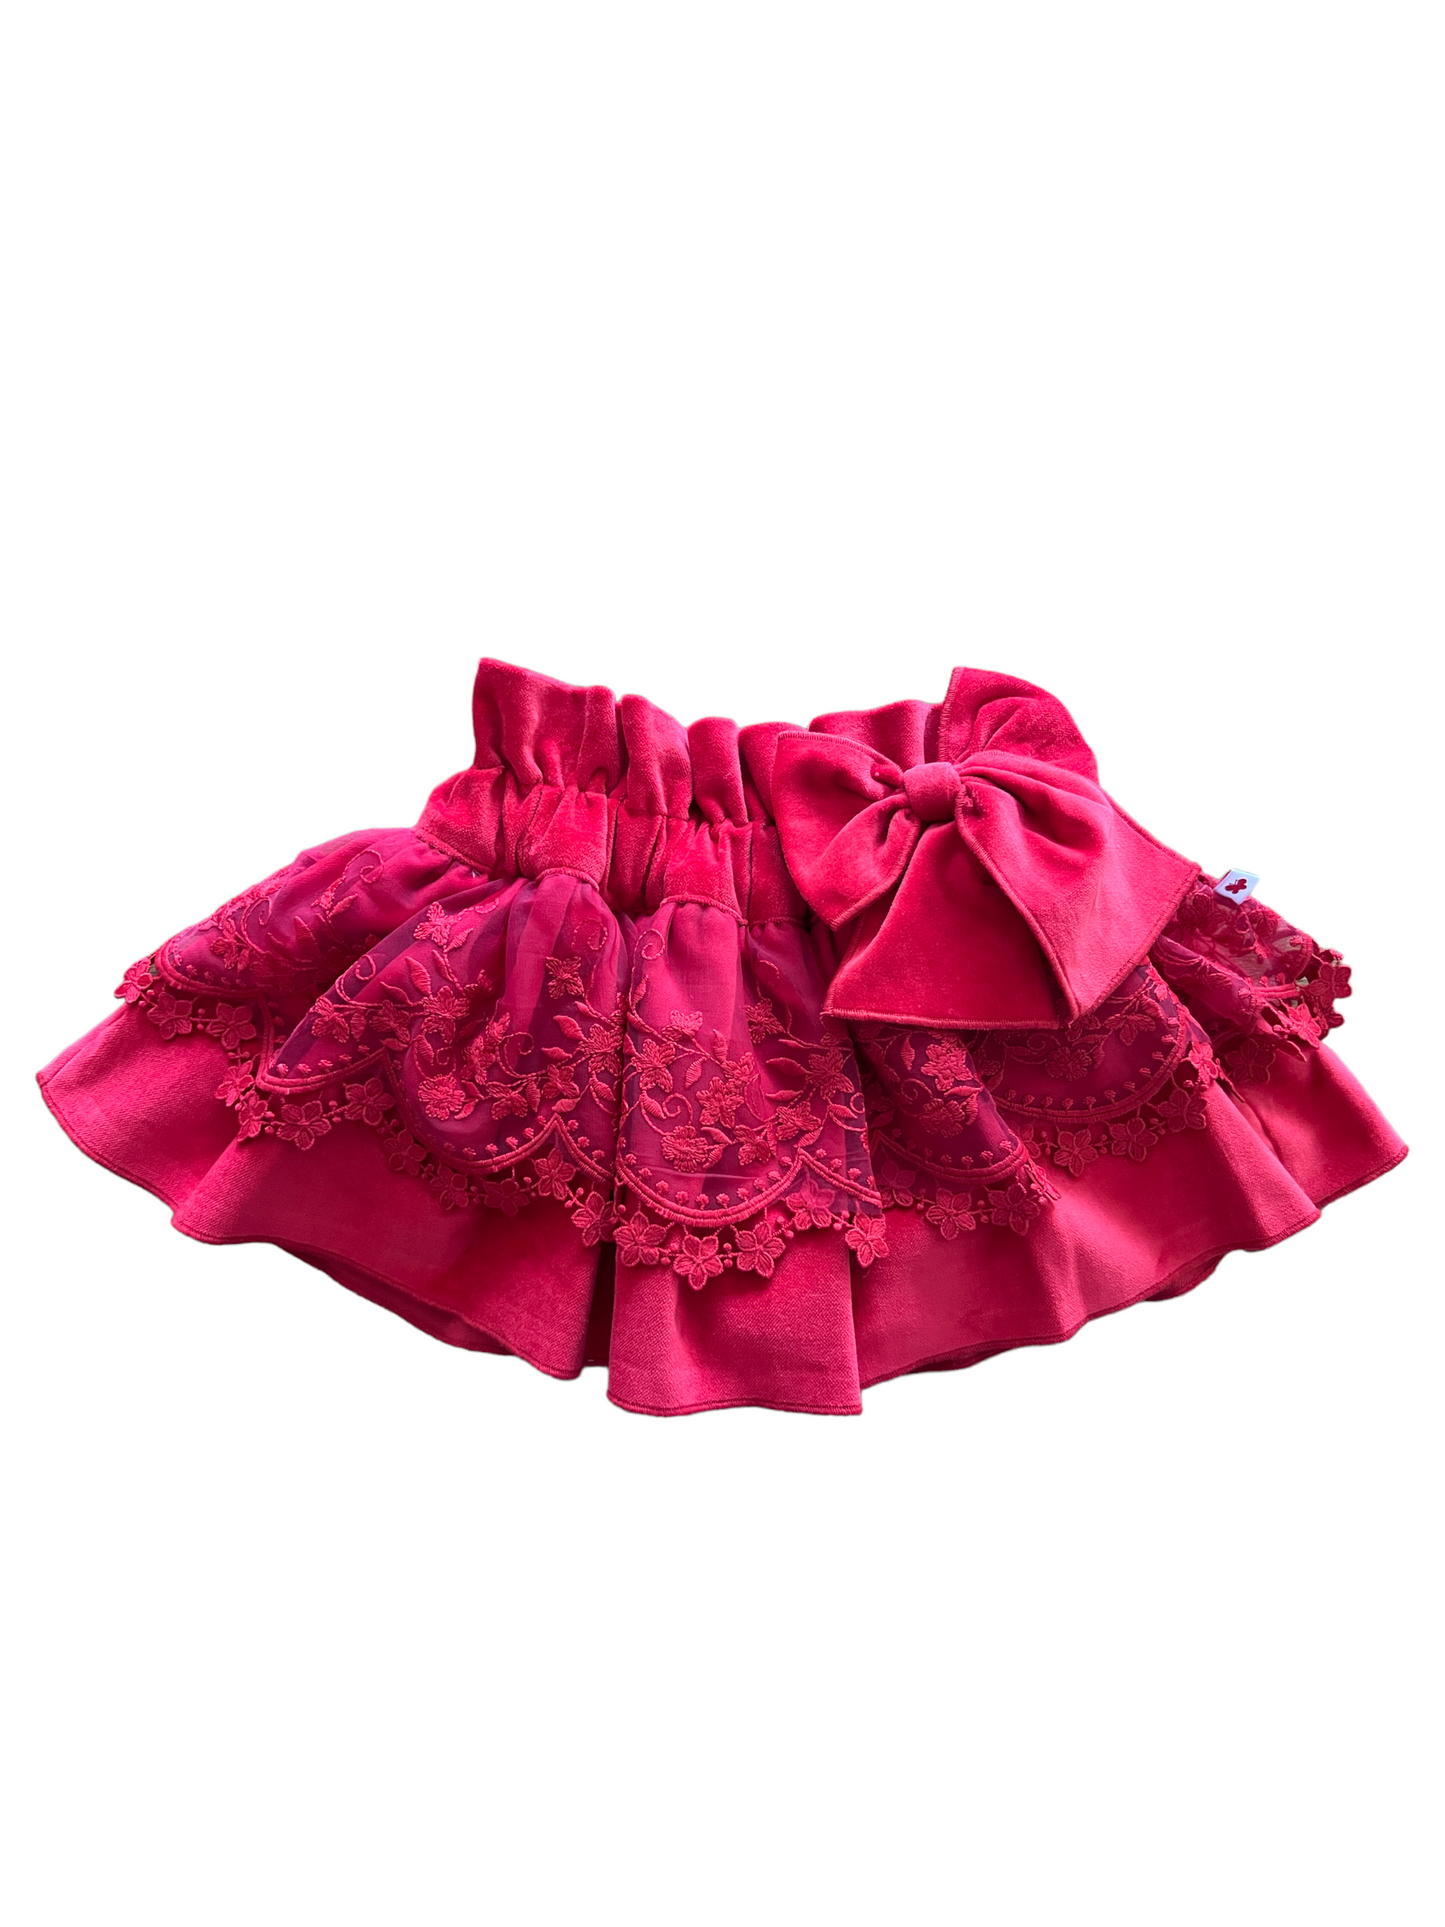 Velvet Underwear Skirt With Red Victorian Lace